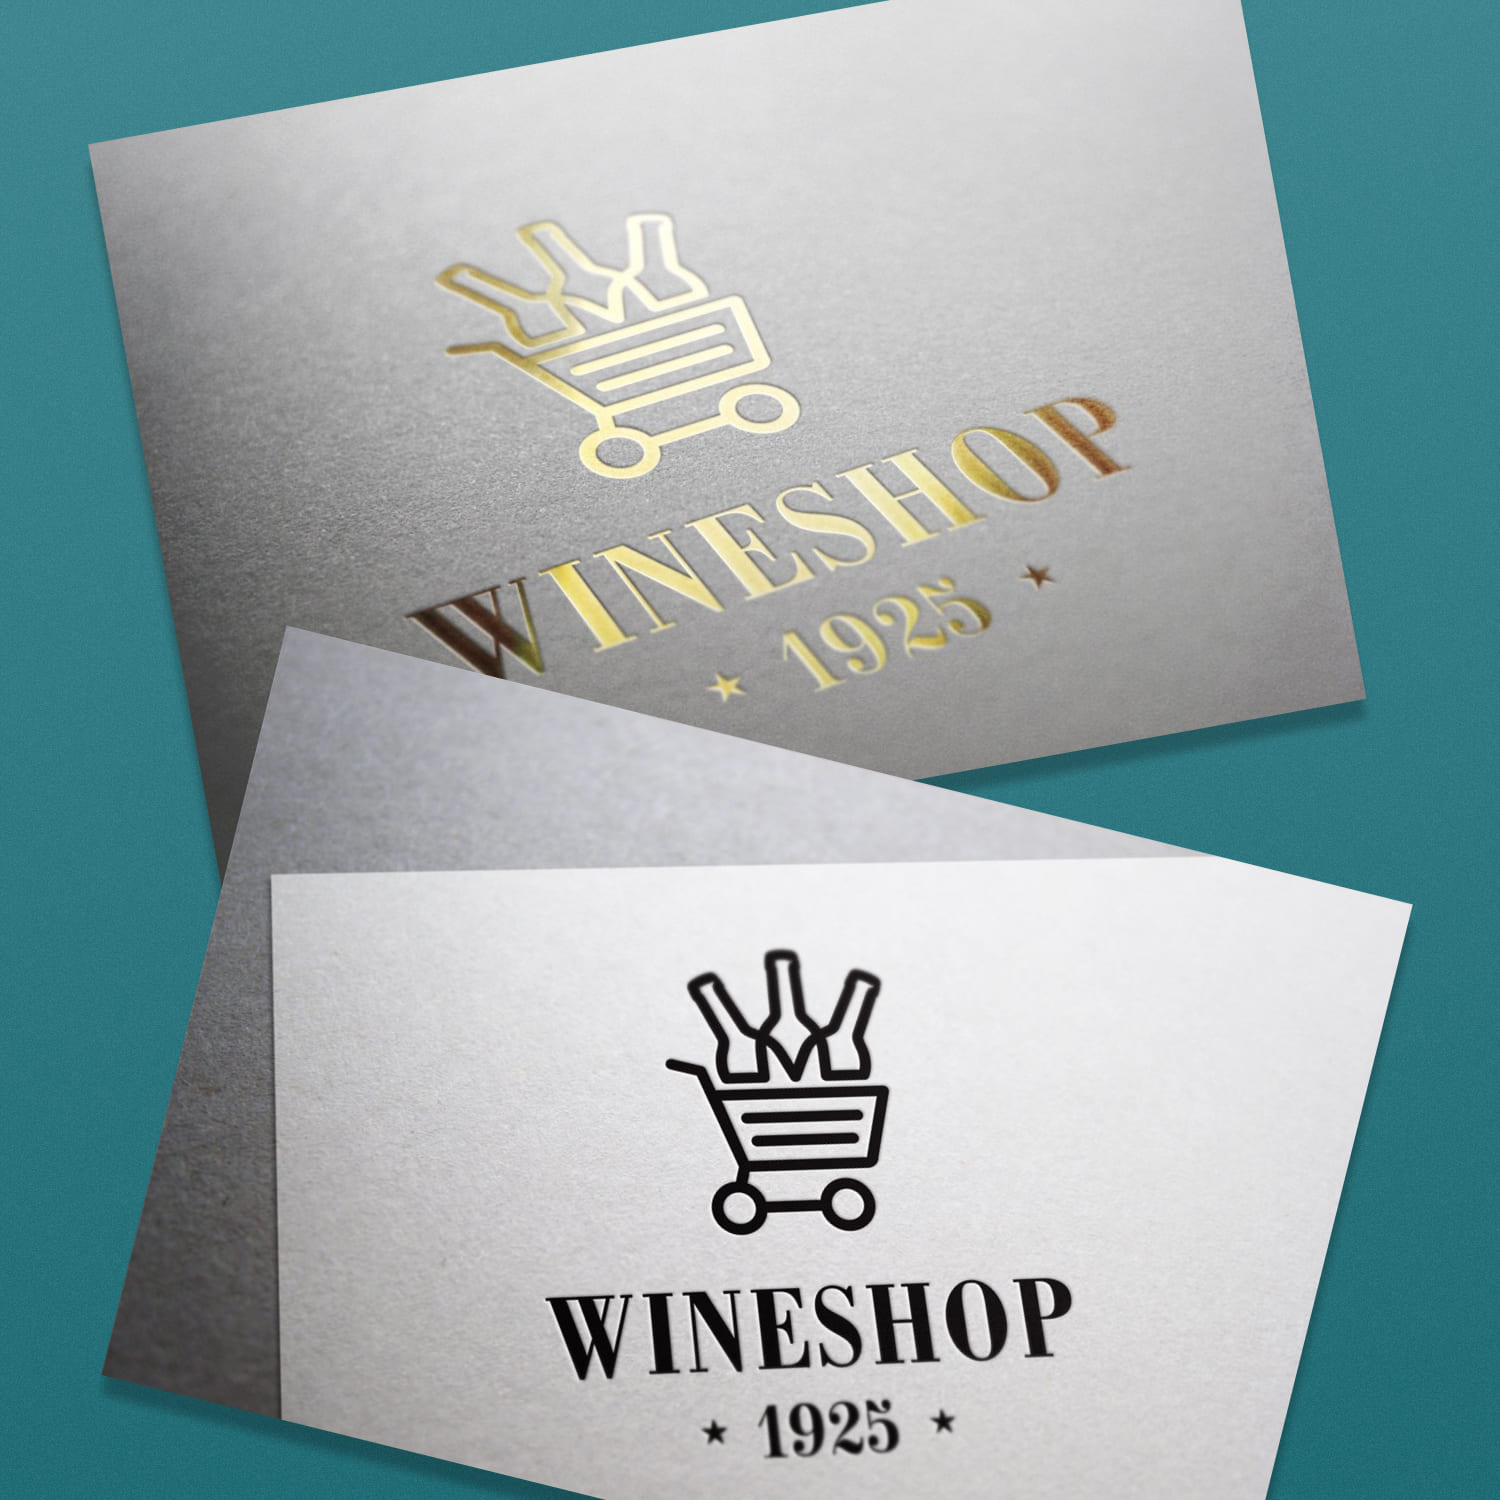 Wine Shop logo for inspiration.